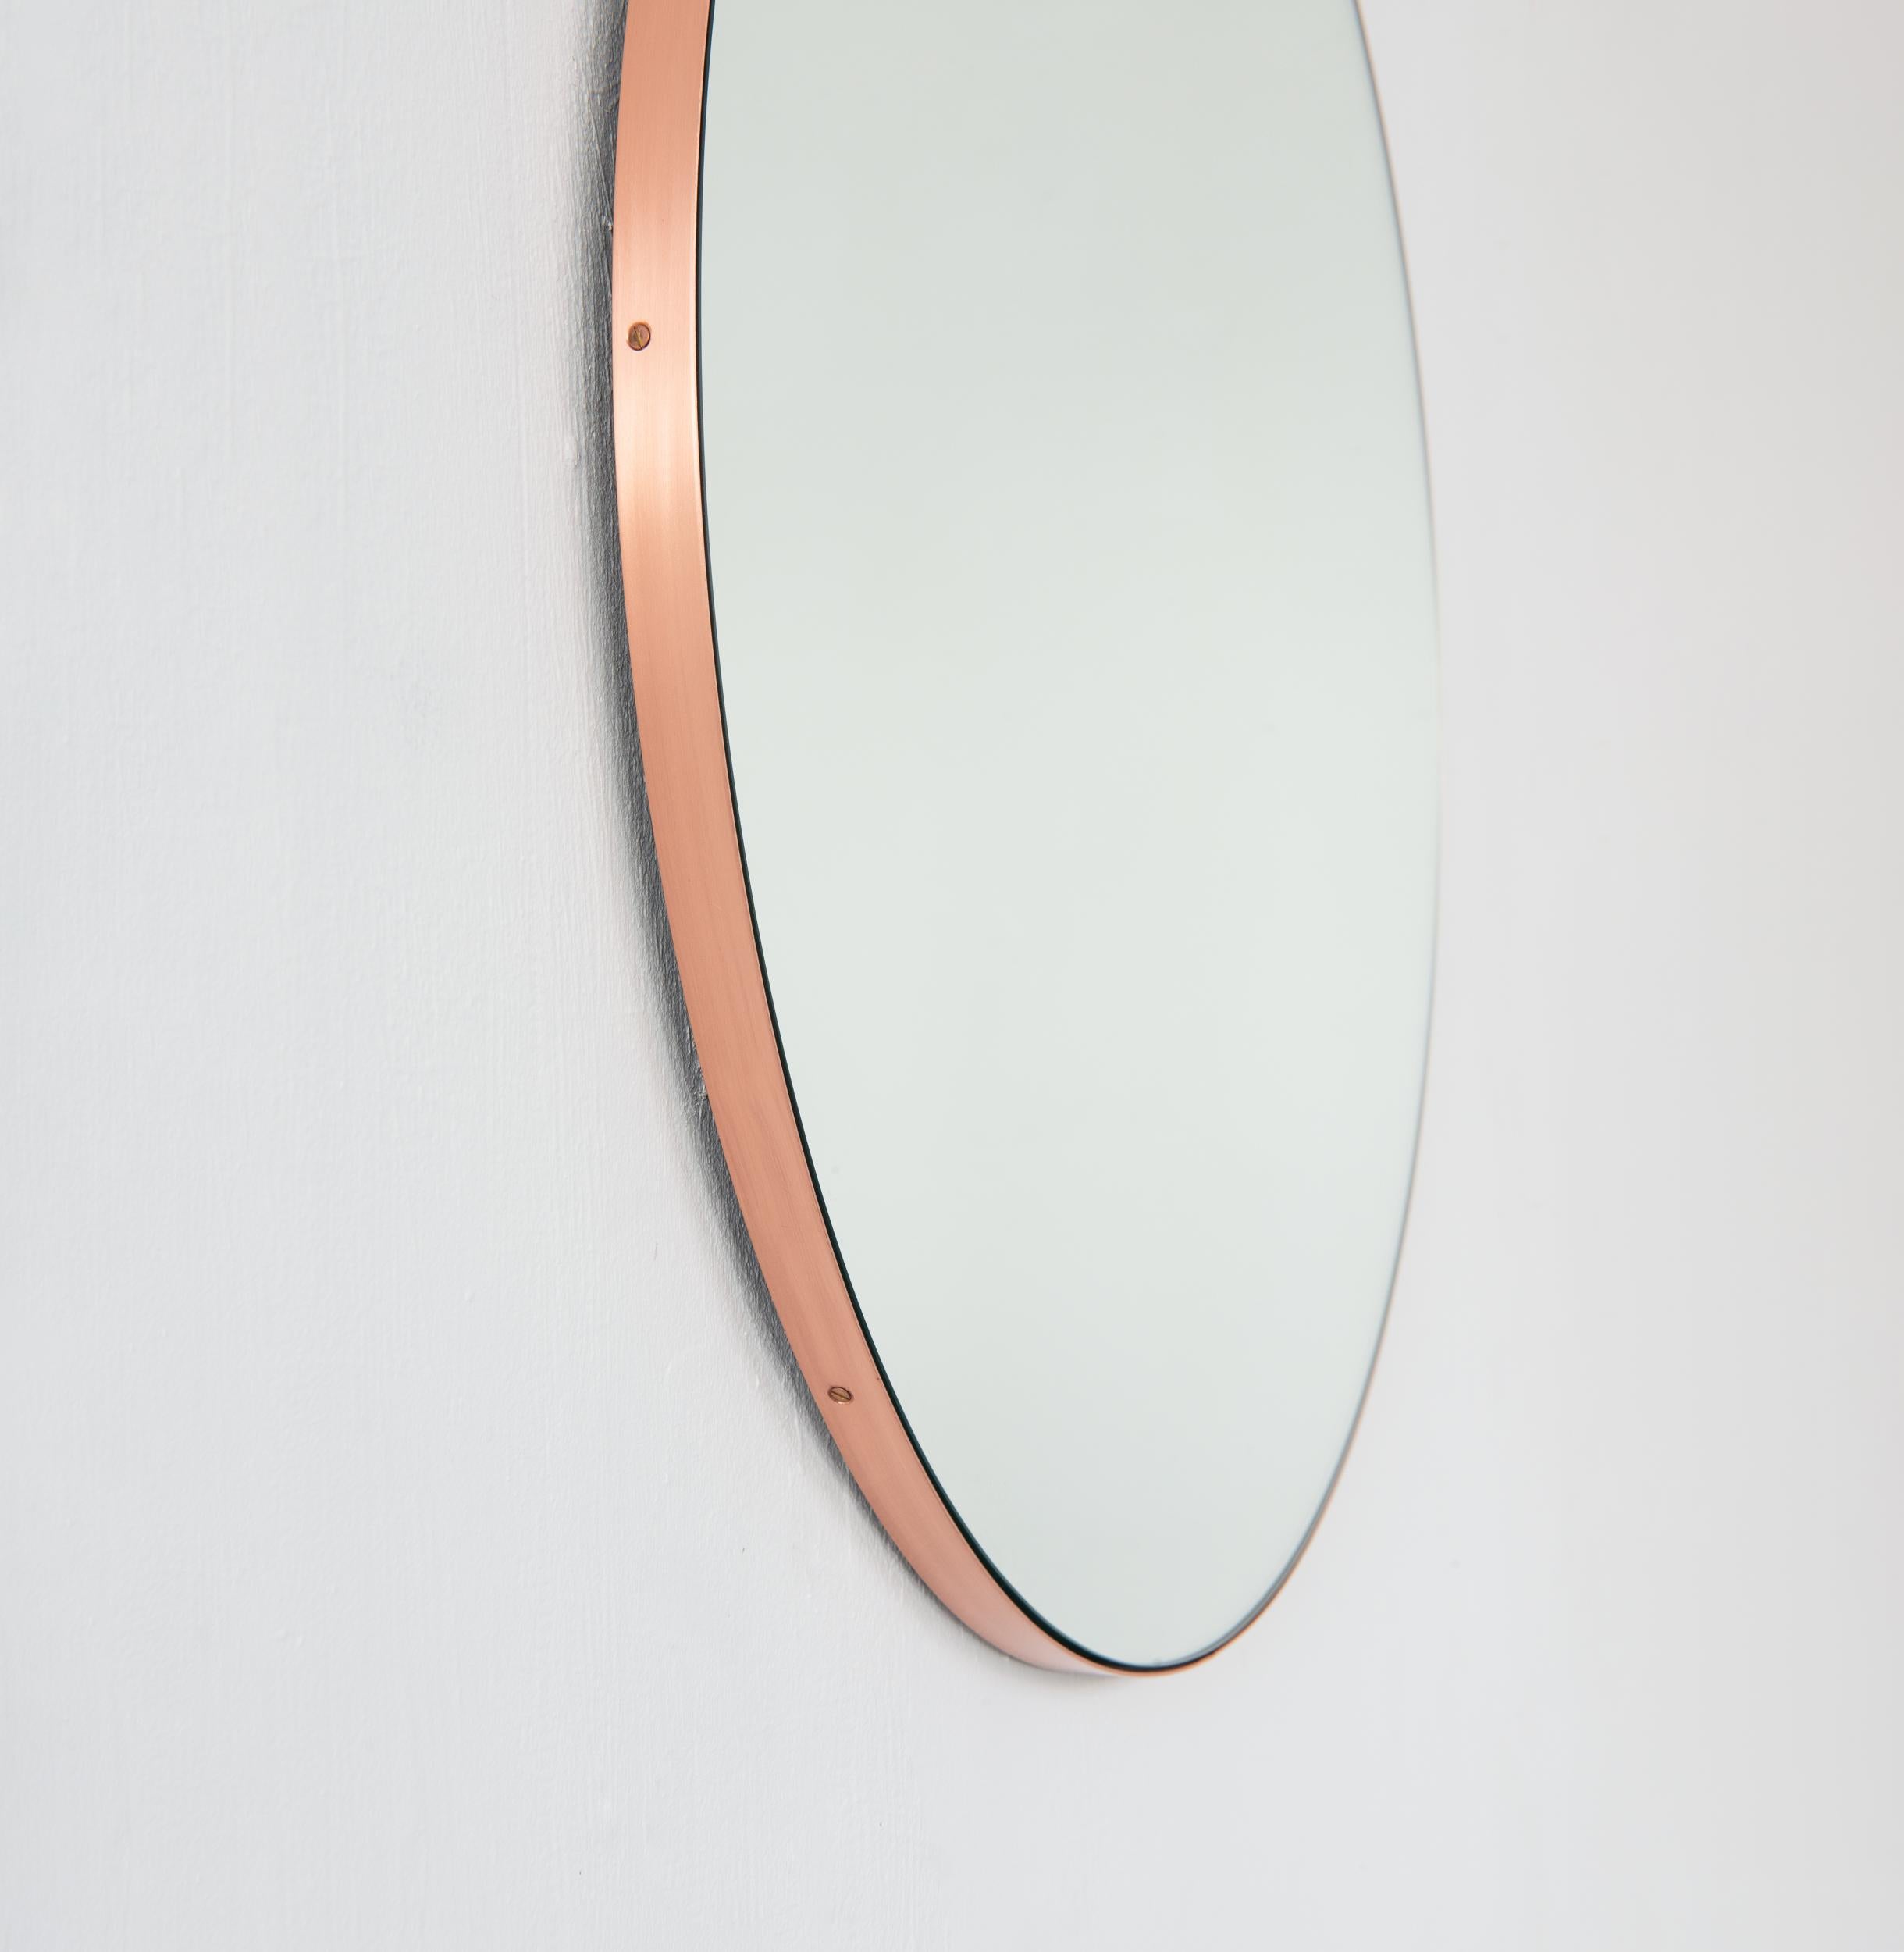 Minimalist Orbis Round Contemporary Mirror with Copper Frame, Regular For Sale